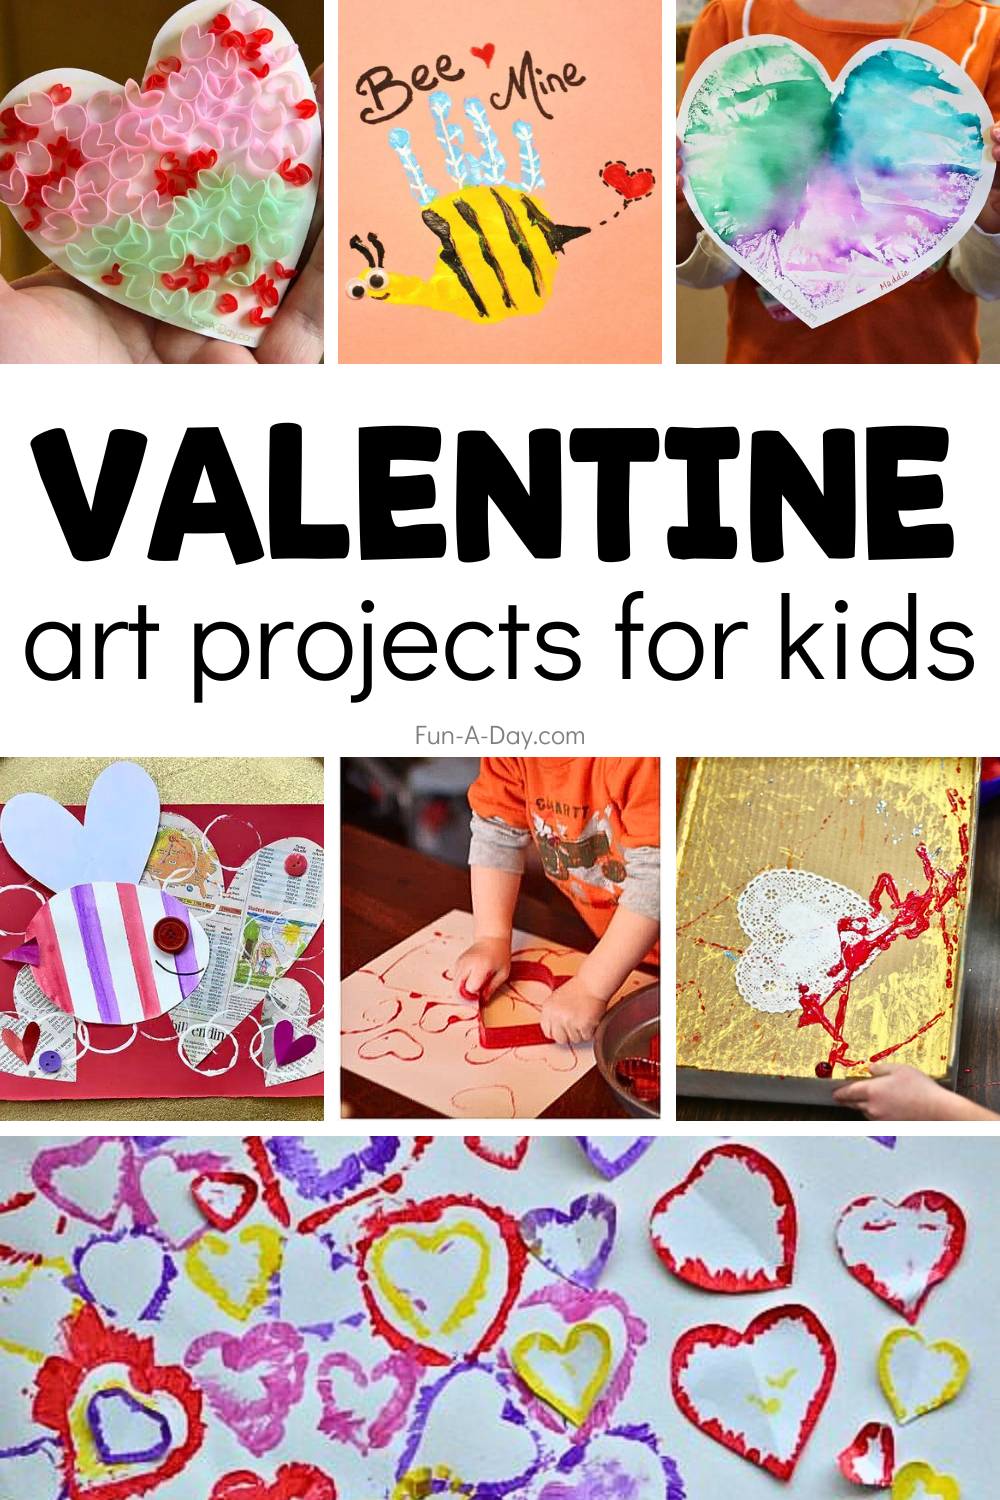 Seven valentine art project ideas for kids with text that reads valentine art projects for kids.